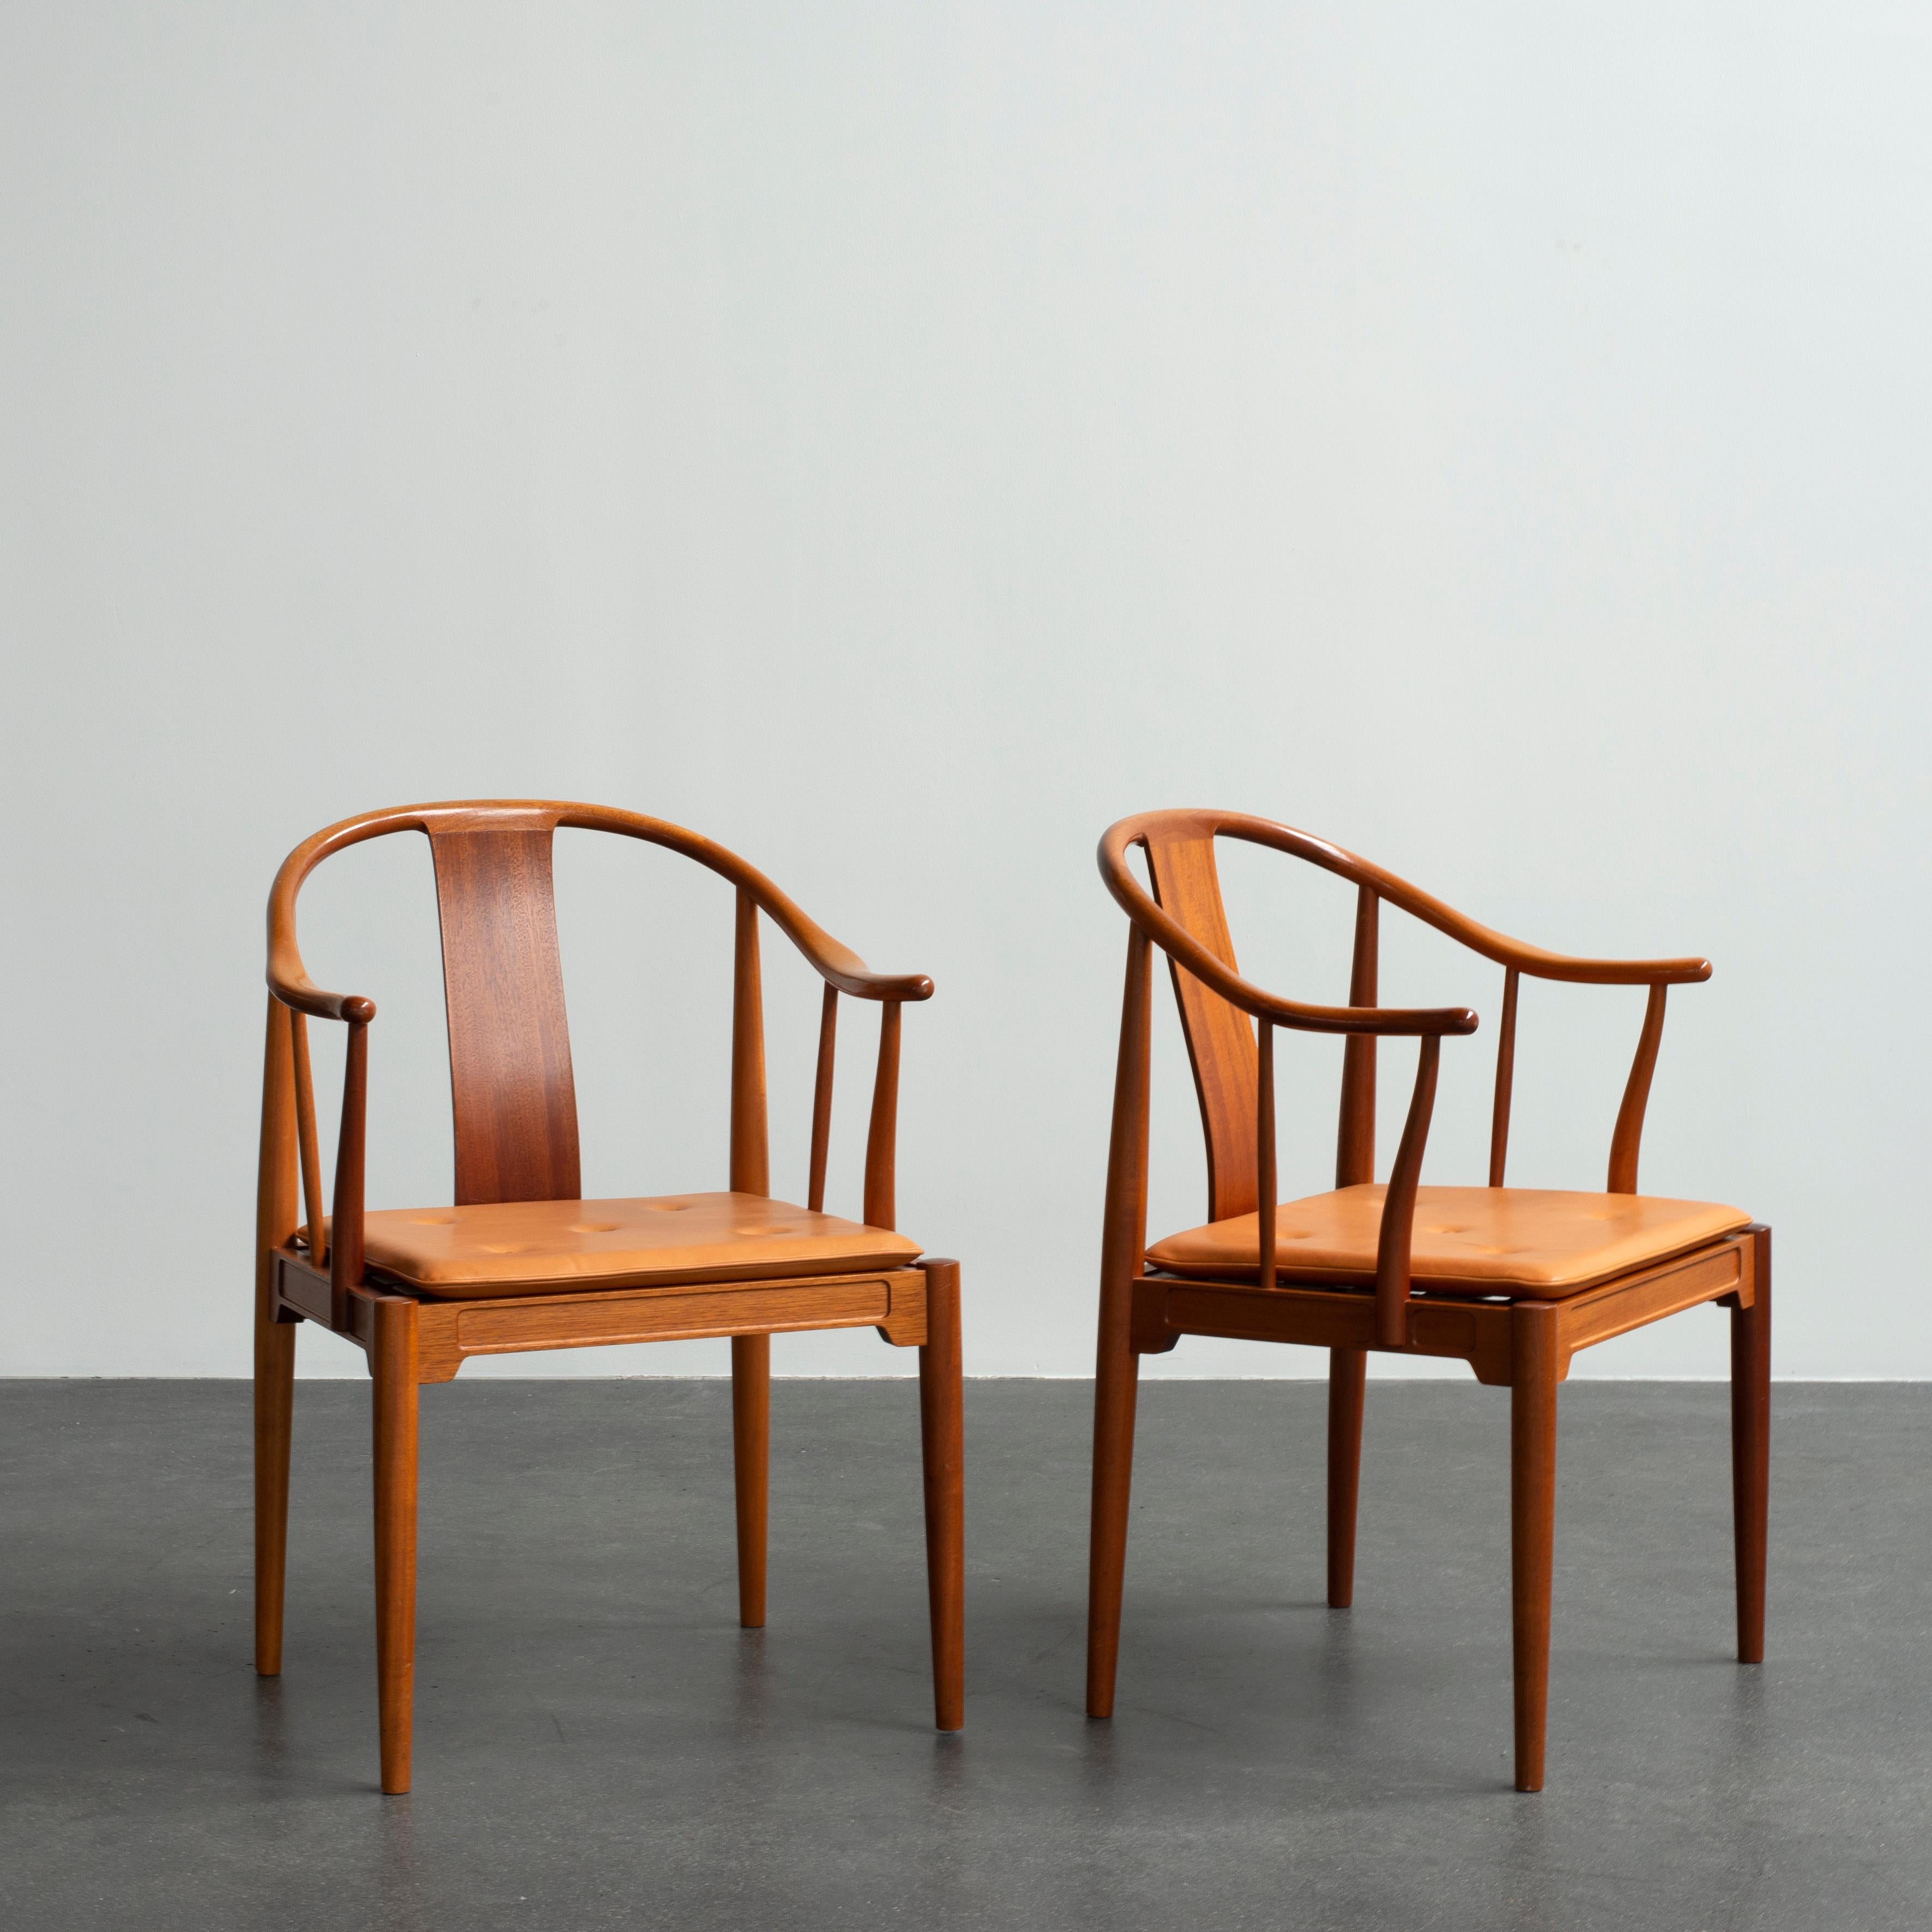 Scandinavian Modern Hans J. Wegner Pair of Chinese Chairs in Mahogany for Fritz Hansen